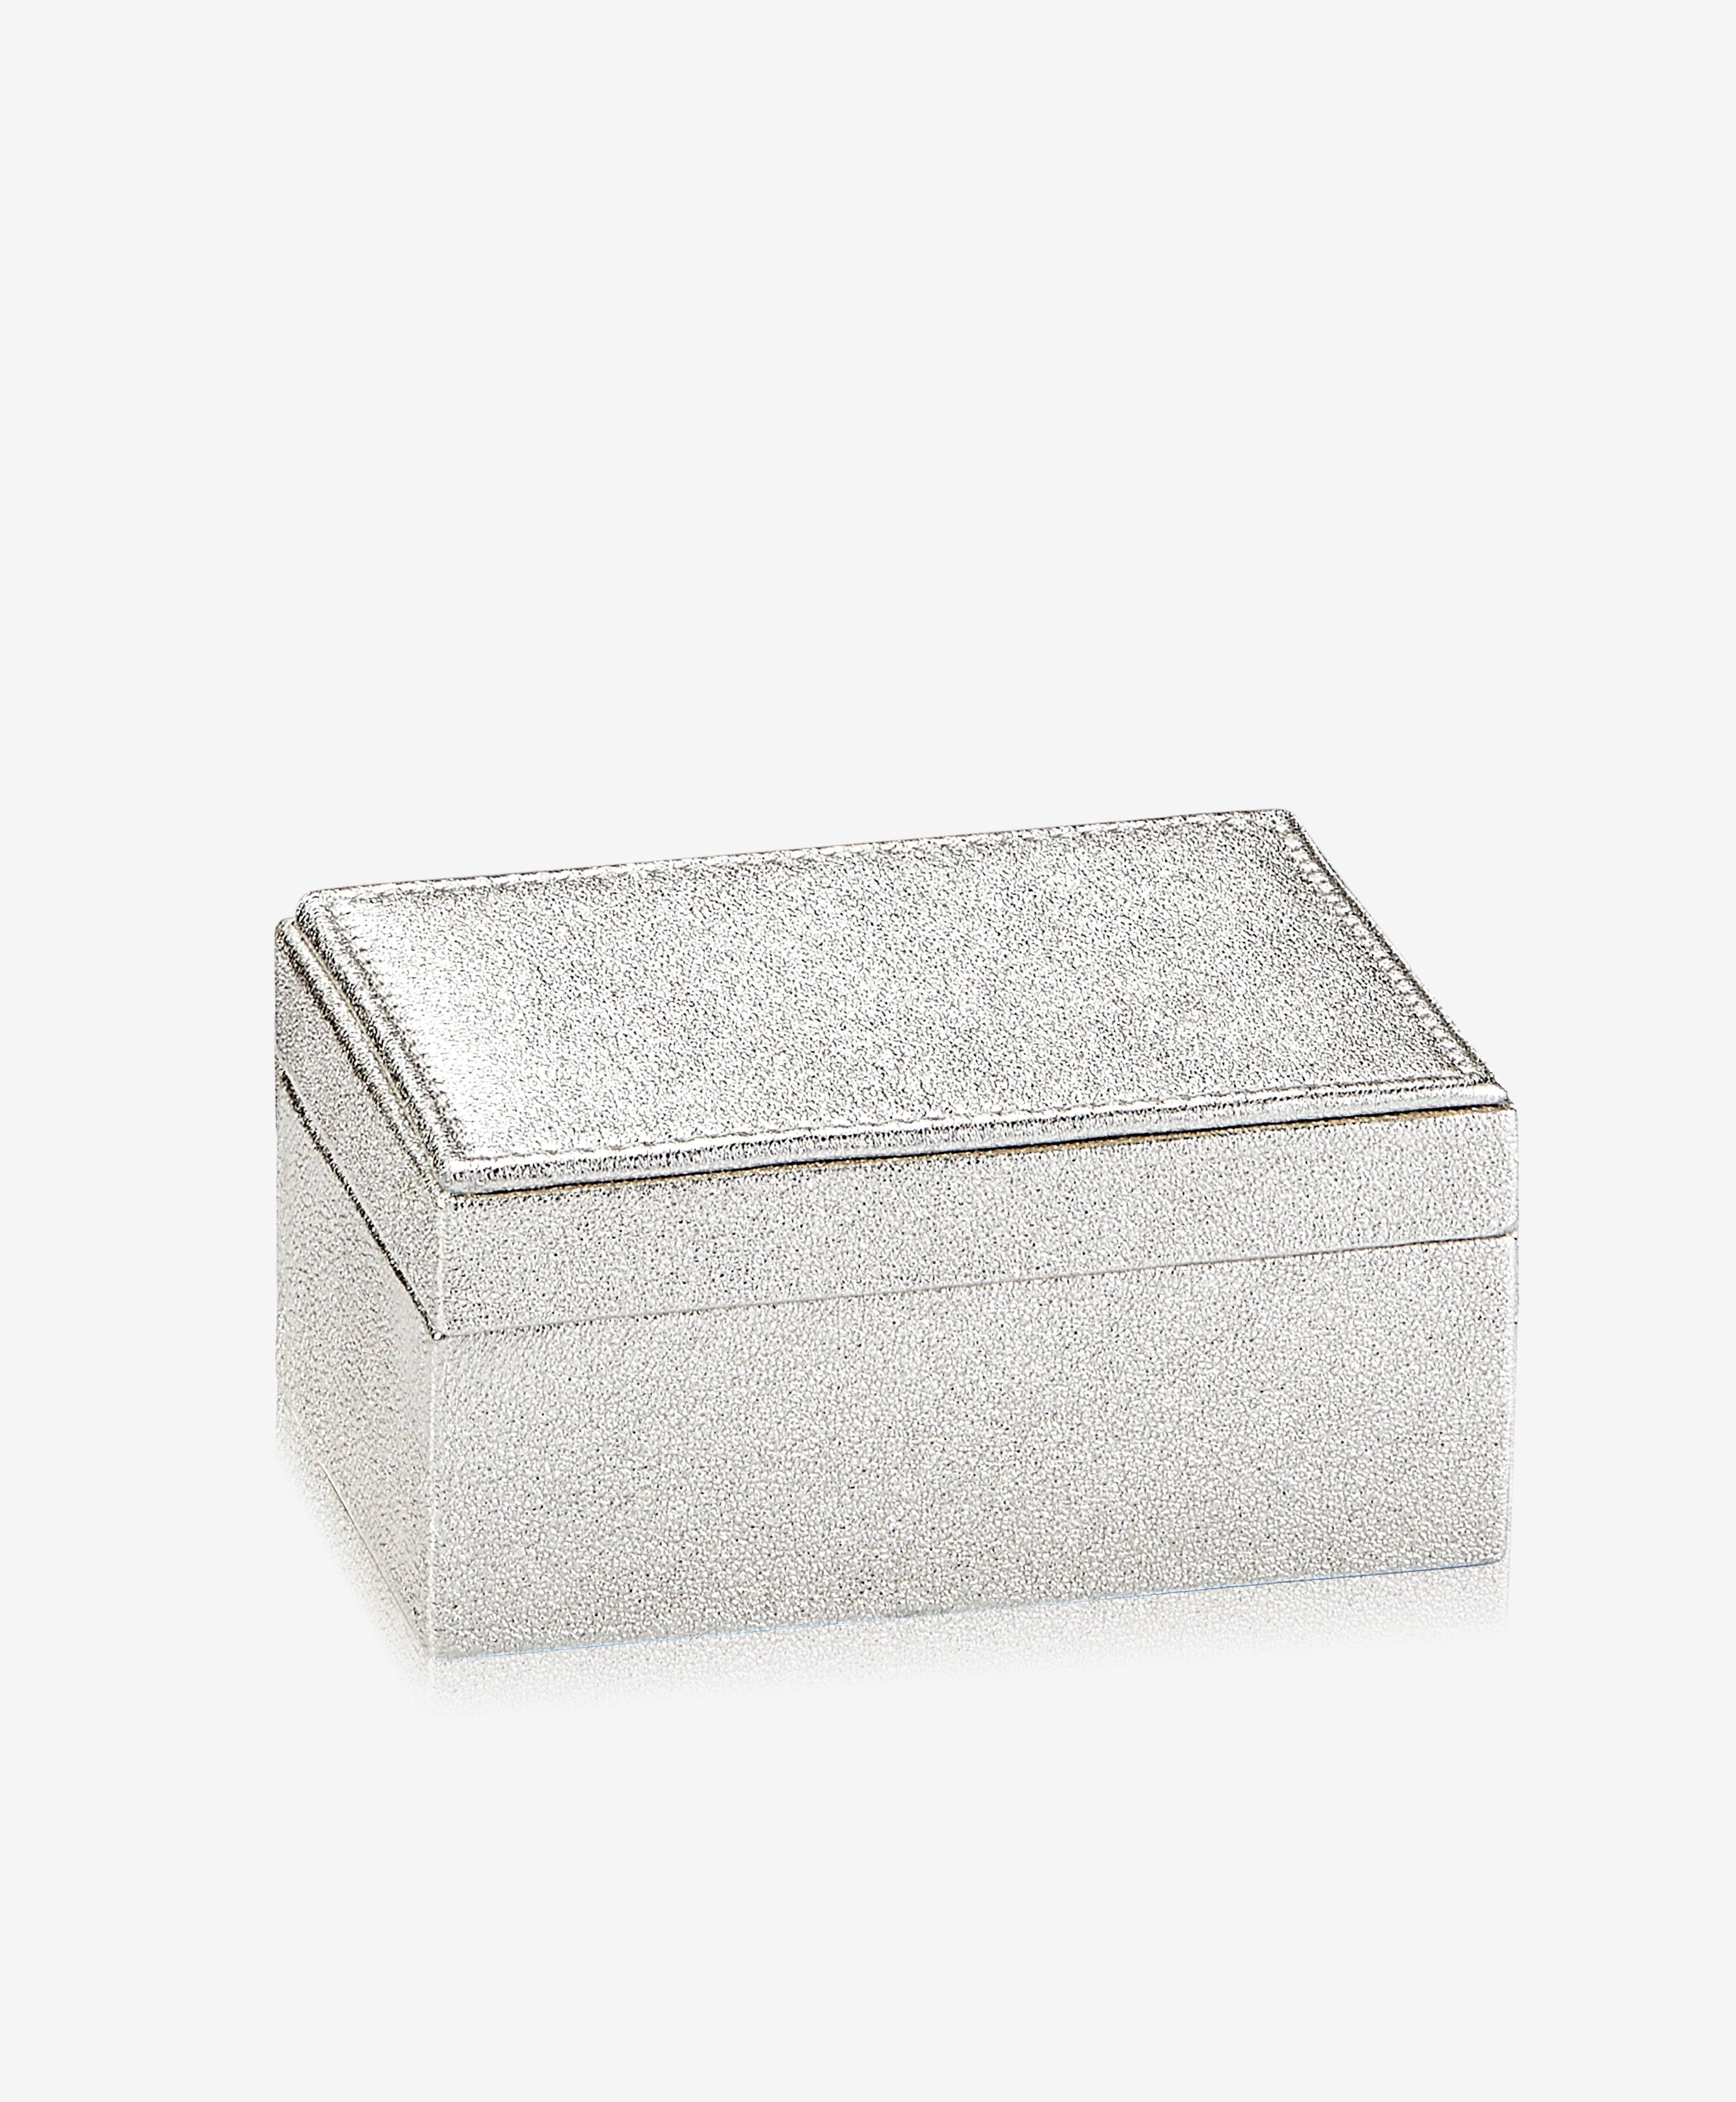 GiGi New York Small Box Platinum Metallic